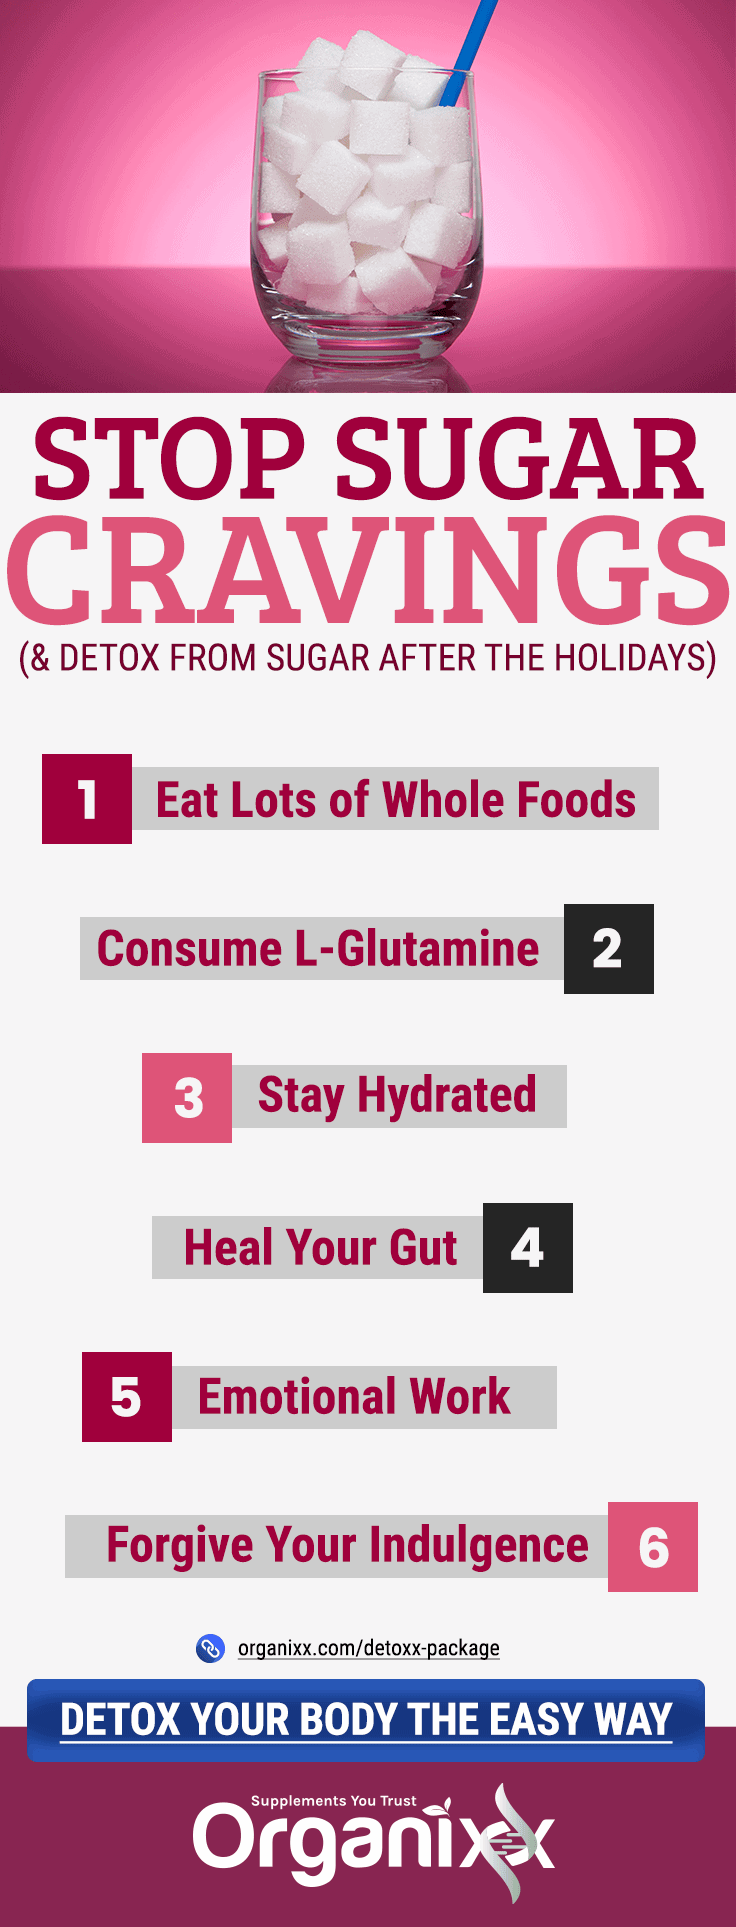 Steps to Stop Sugar Cravings